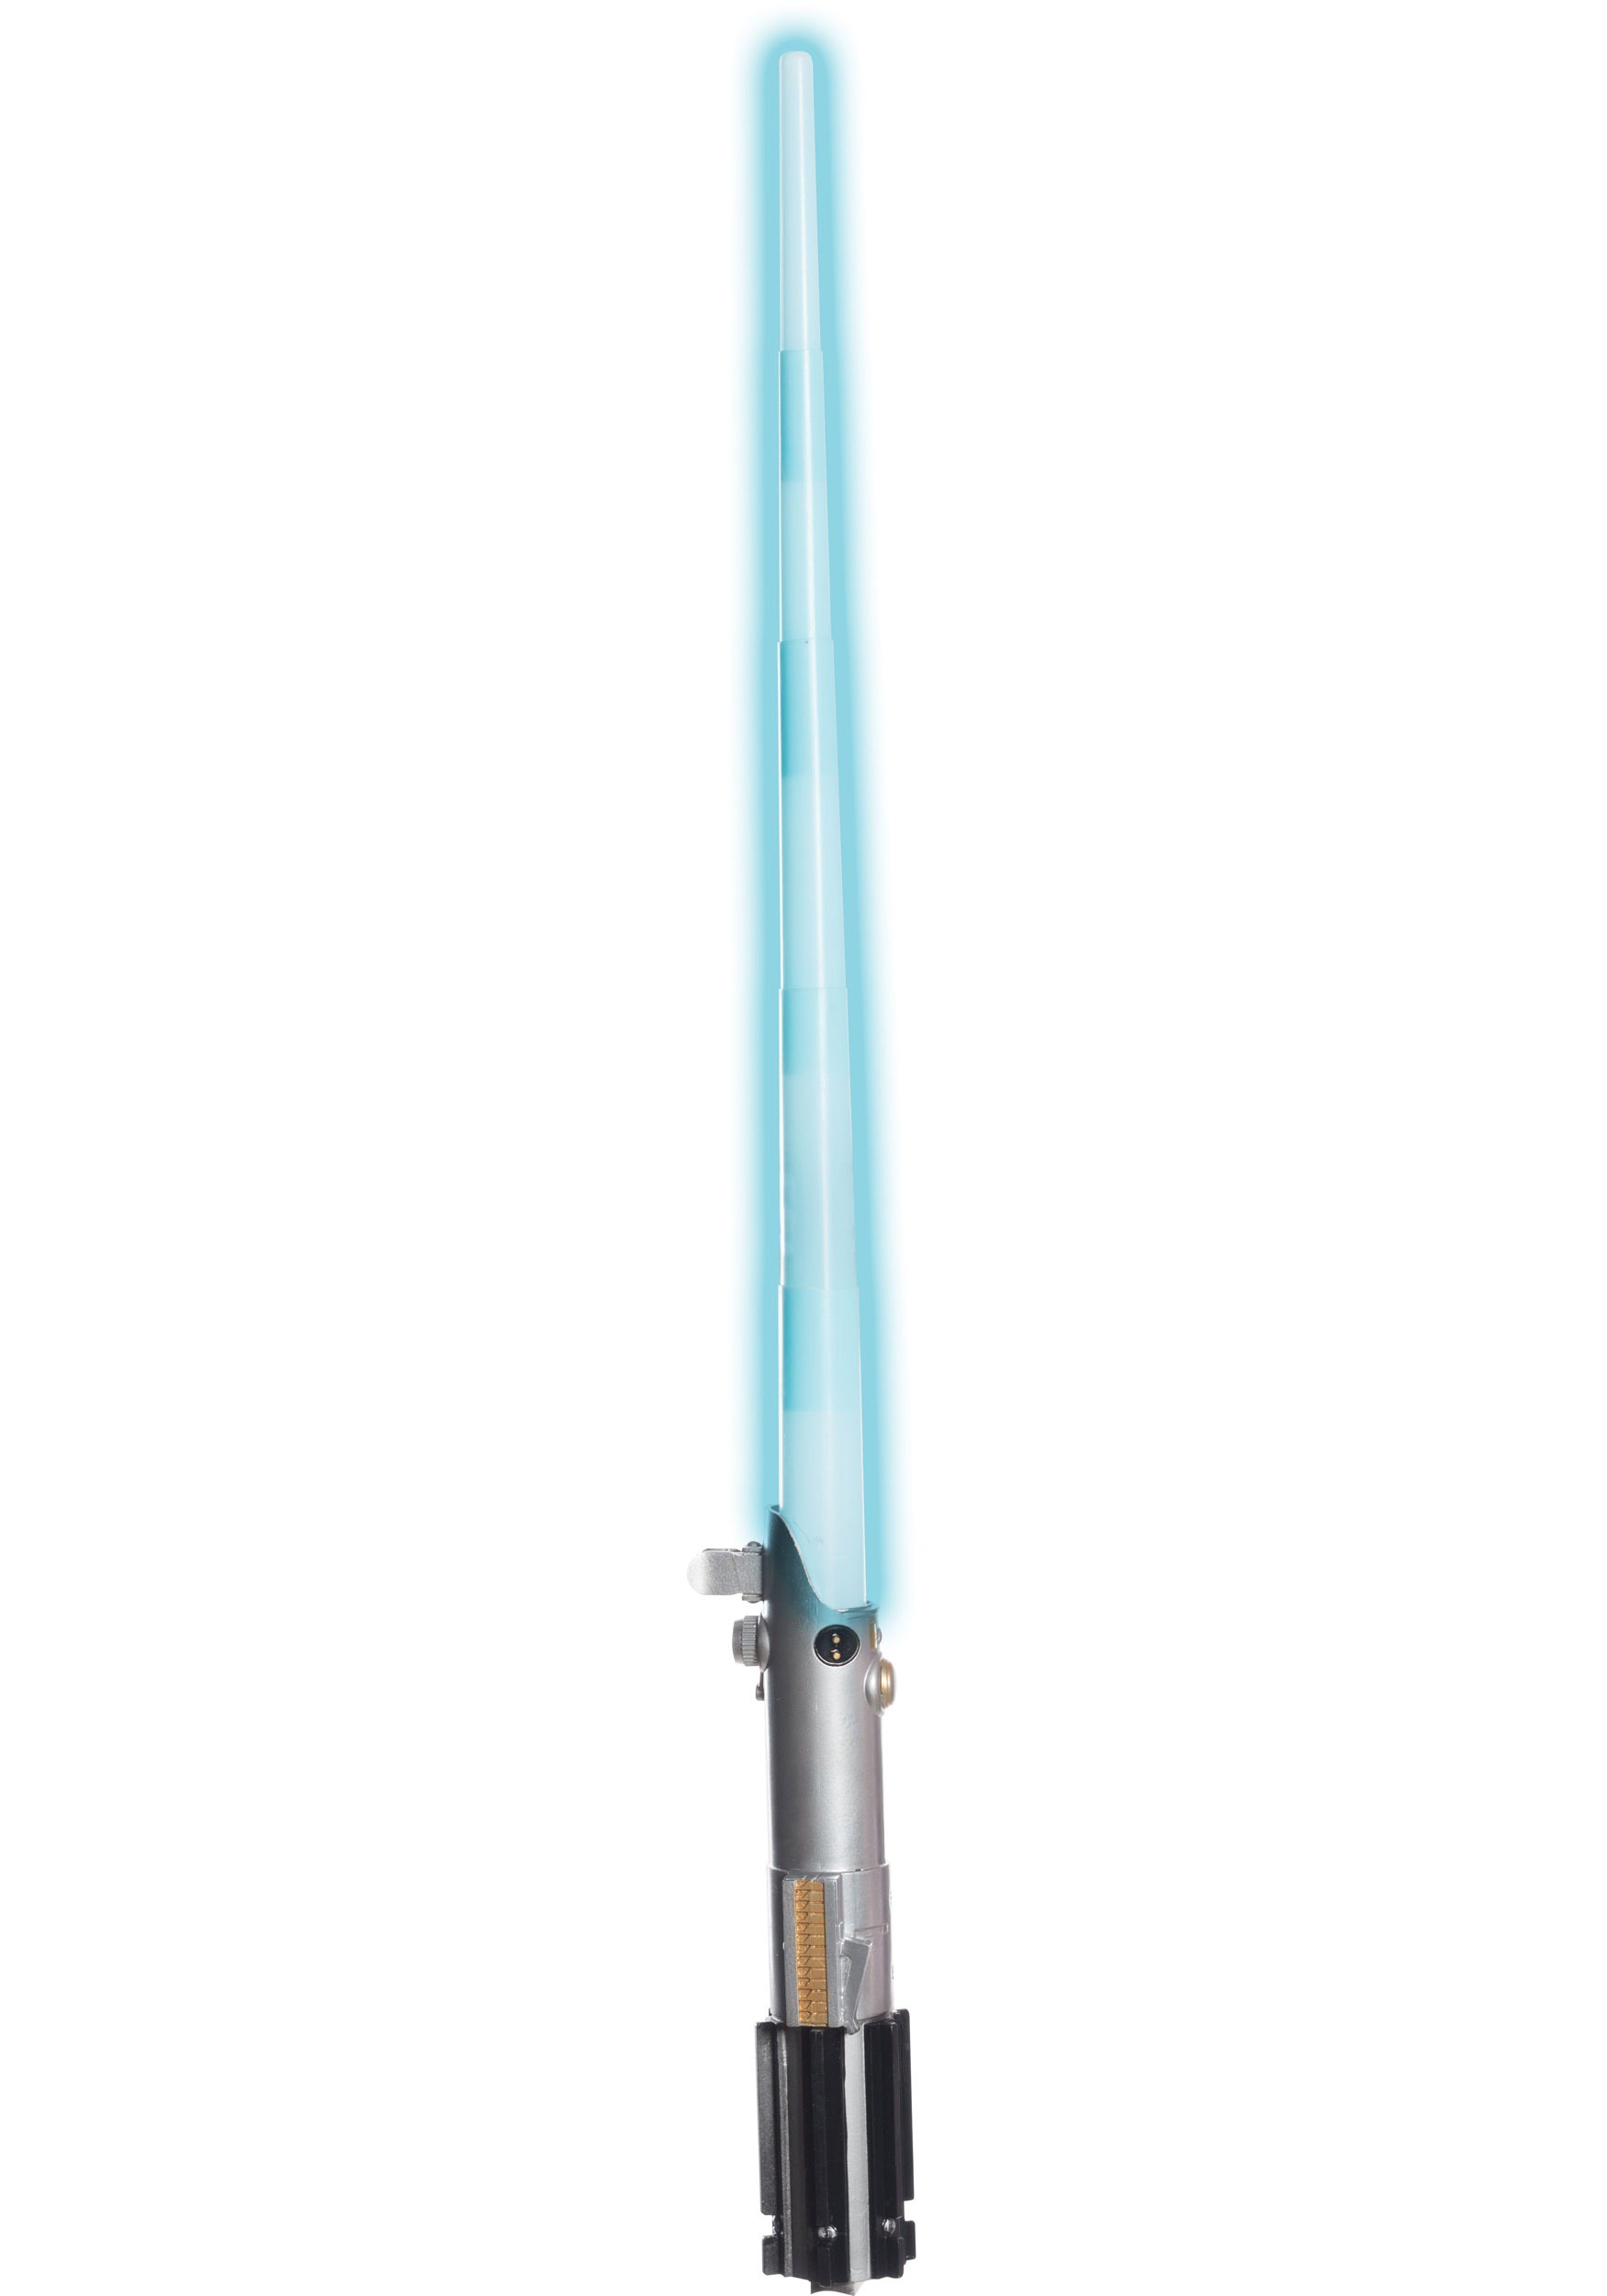 Rey Lightsaber Star Wars